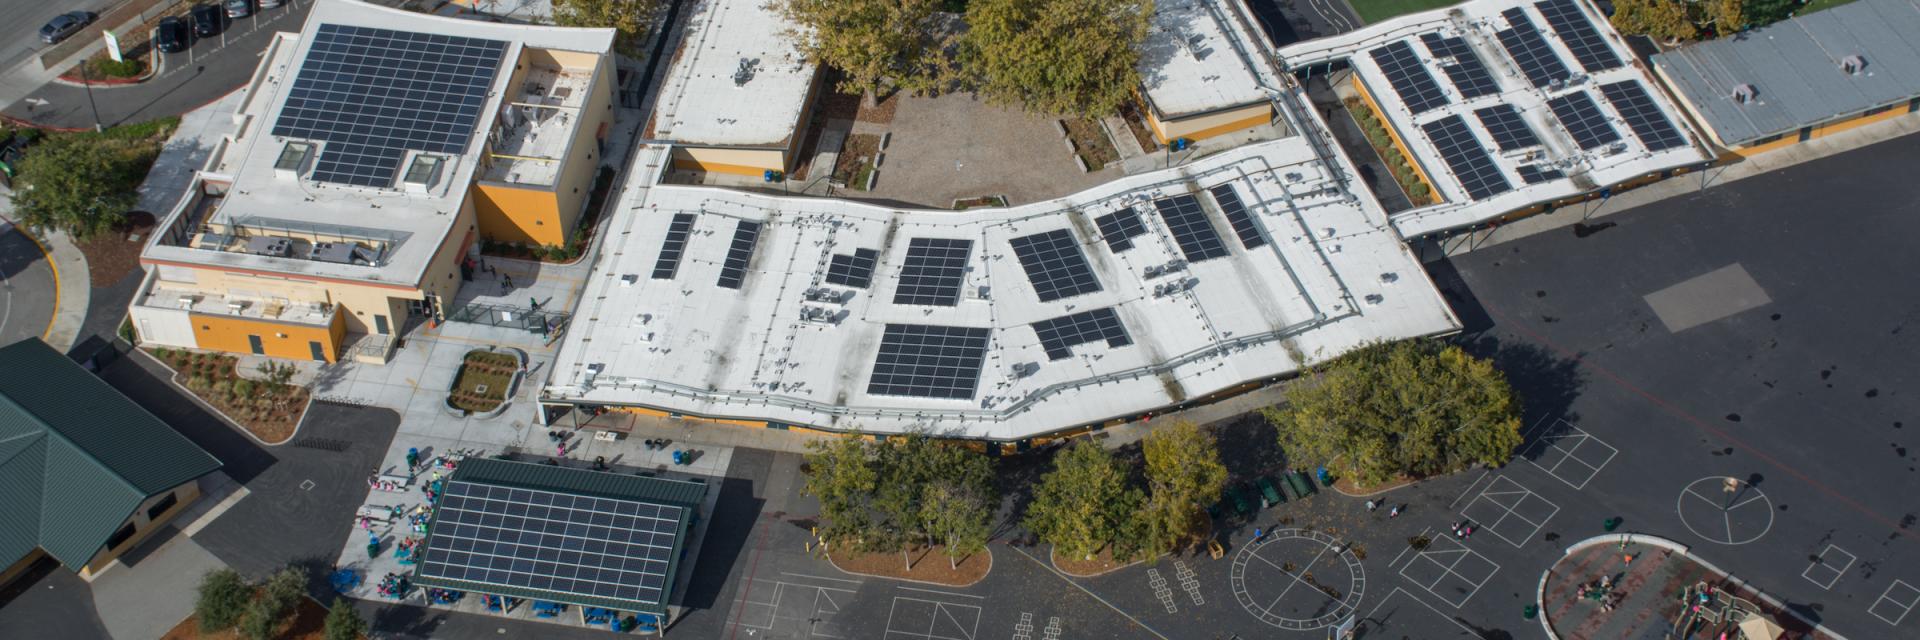 Elementary School Solar